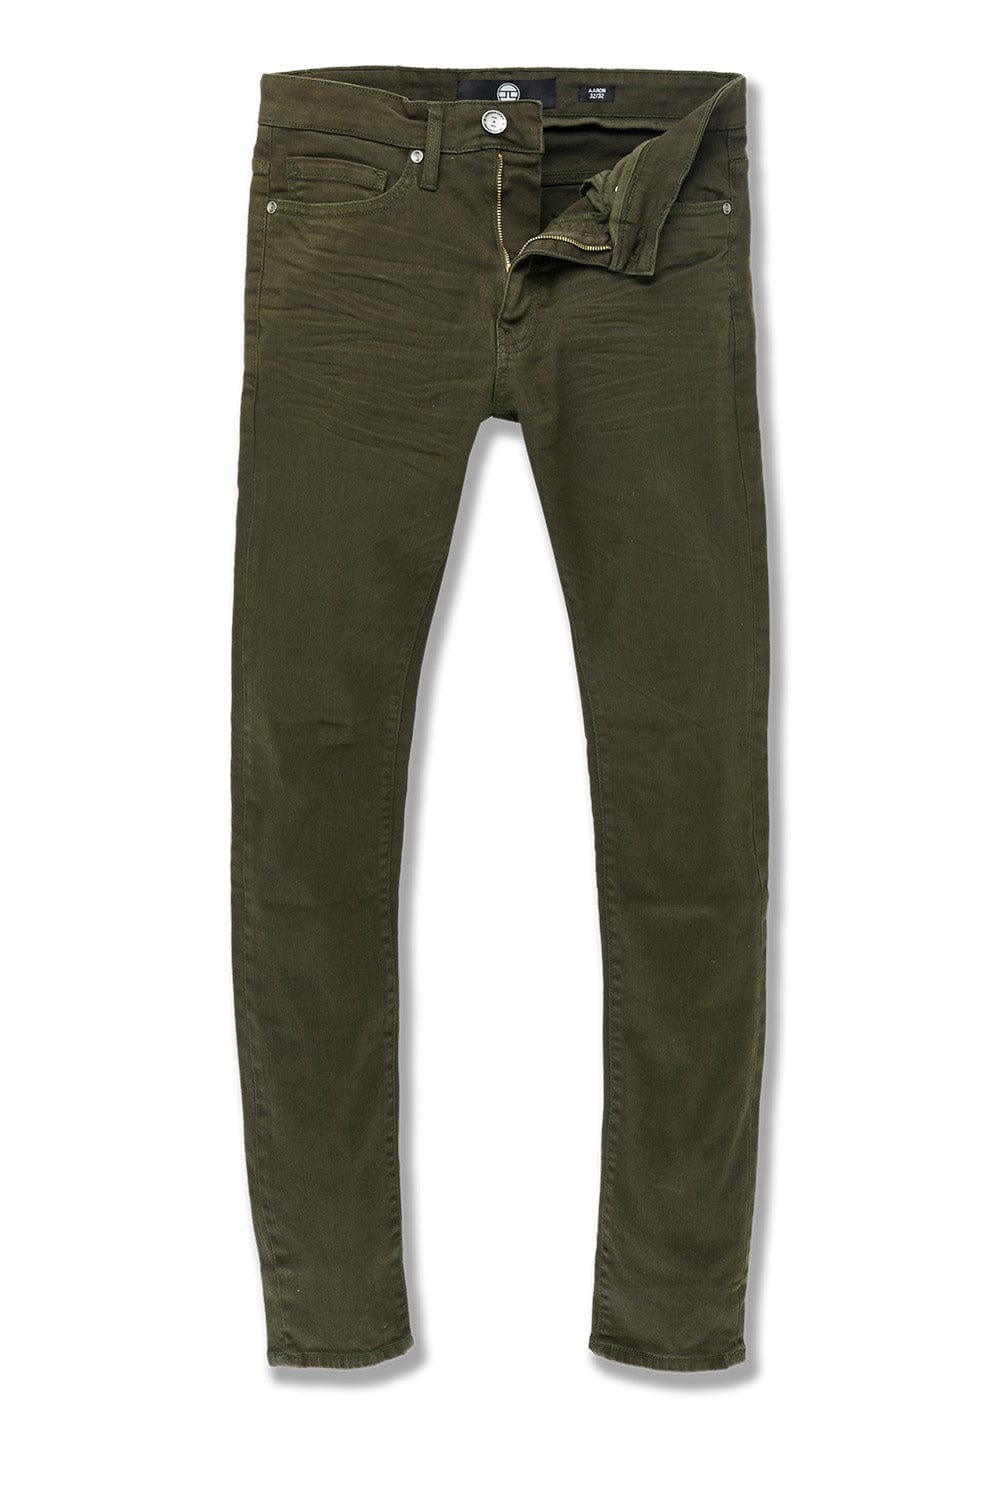 Jordan Craig Ross - Pure Tribeca Twill Pants (Core Colors) Army Green / 28/32